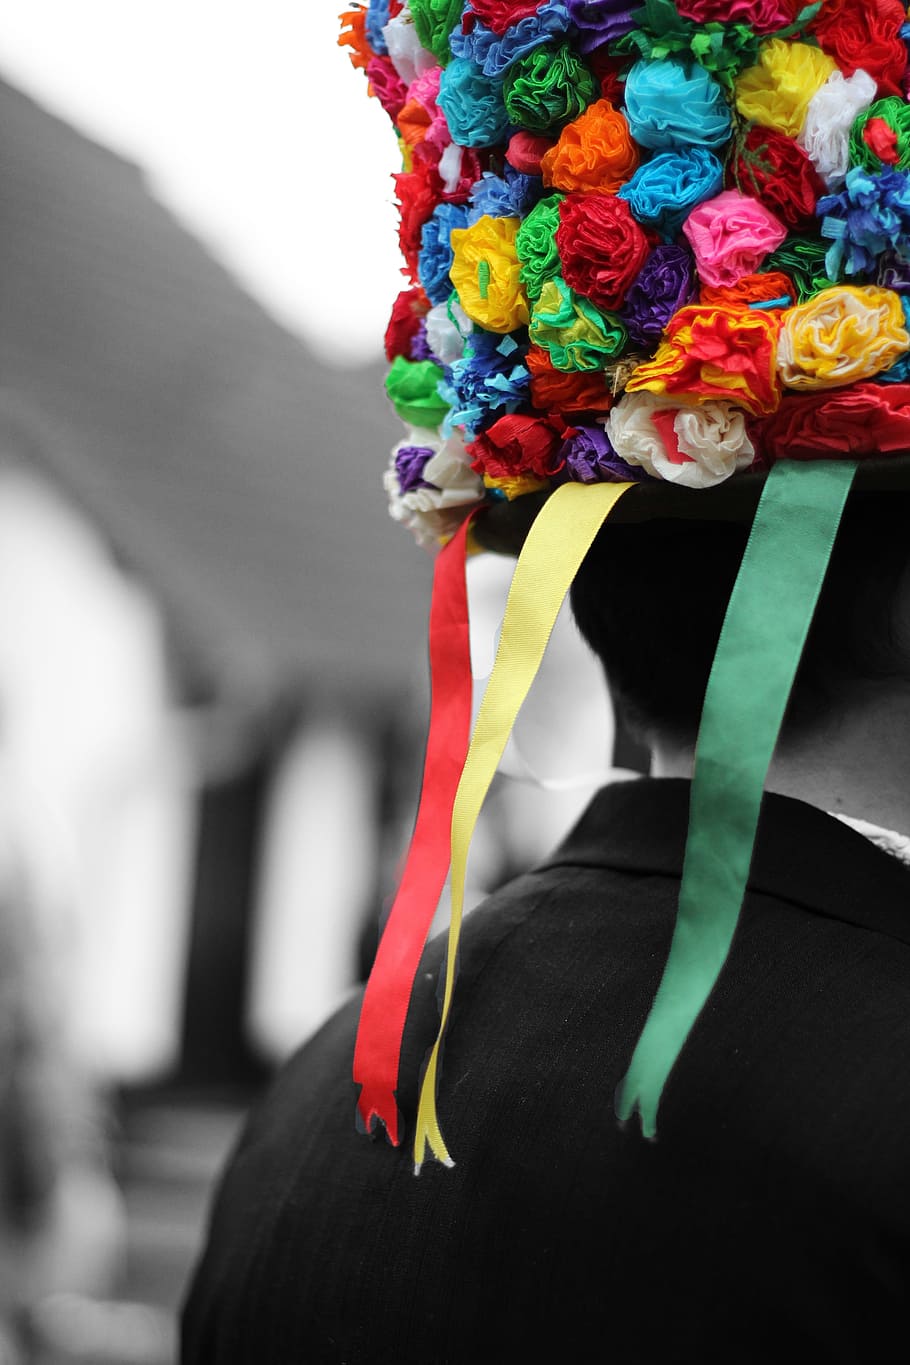 Carnival, Colors, Mask, carol, ružičky, finger paints, yellow